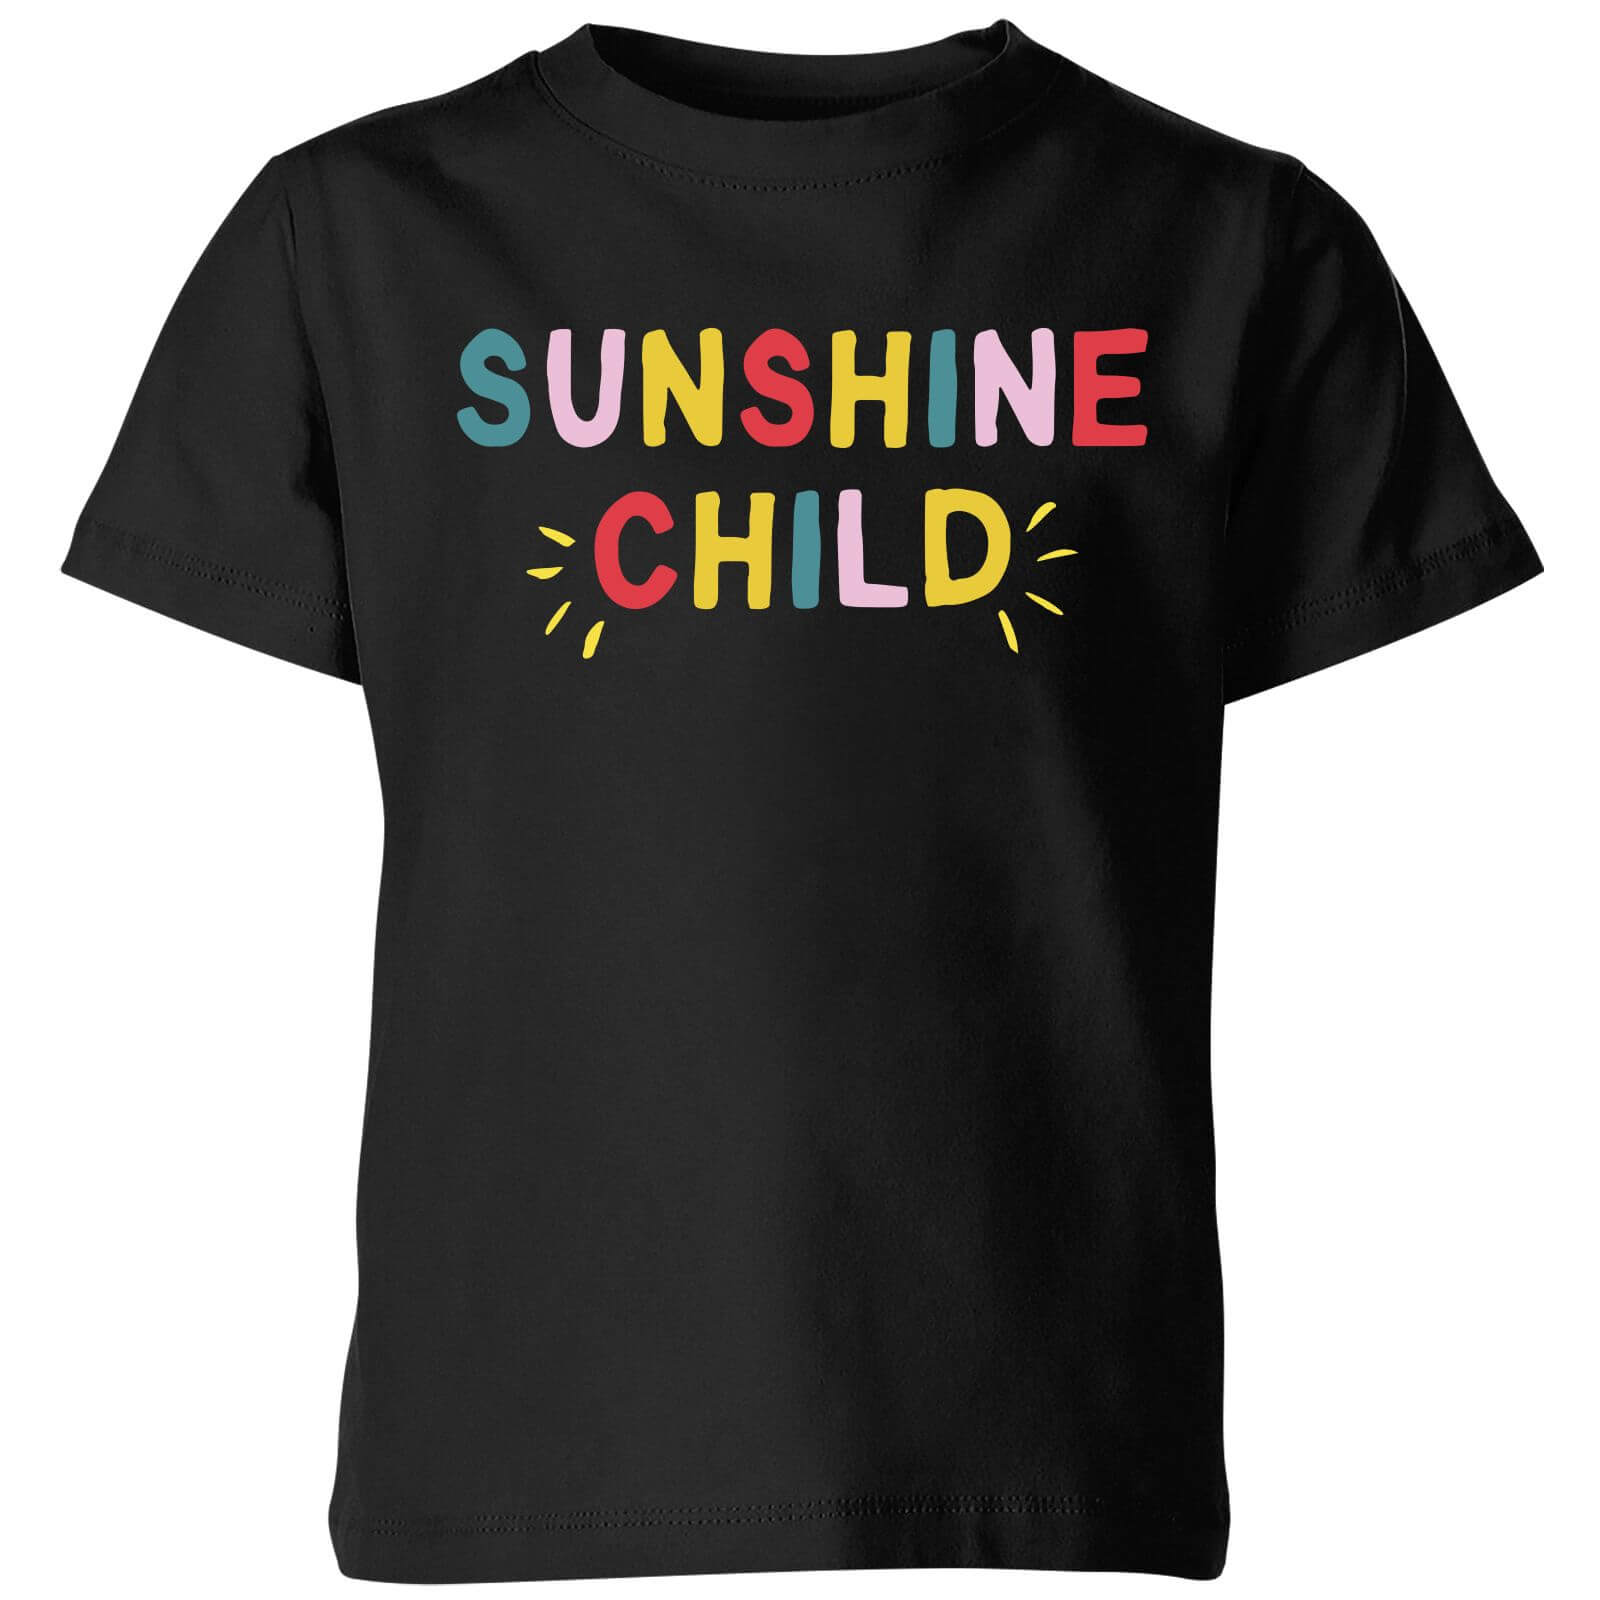 My Little Rascal Sunshine Child Kids' T-Shirt - Black - 3-4 Years - Black